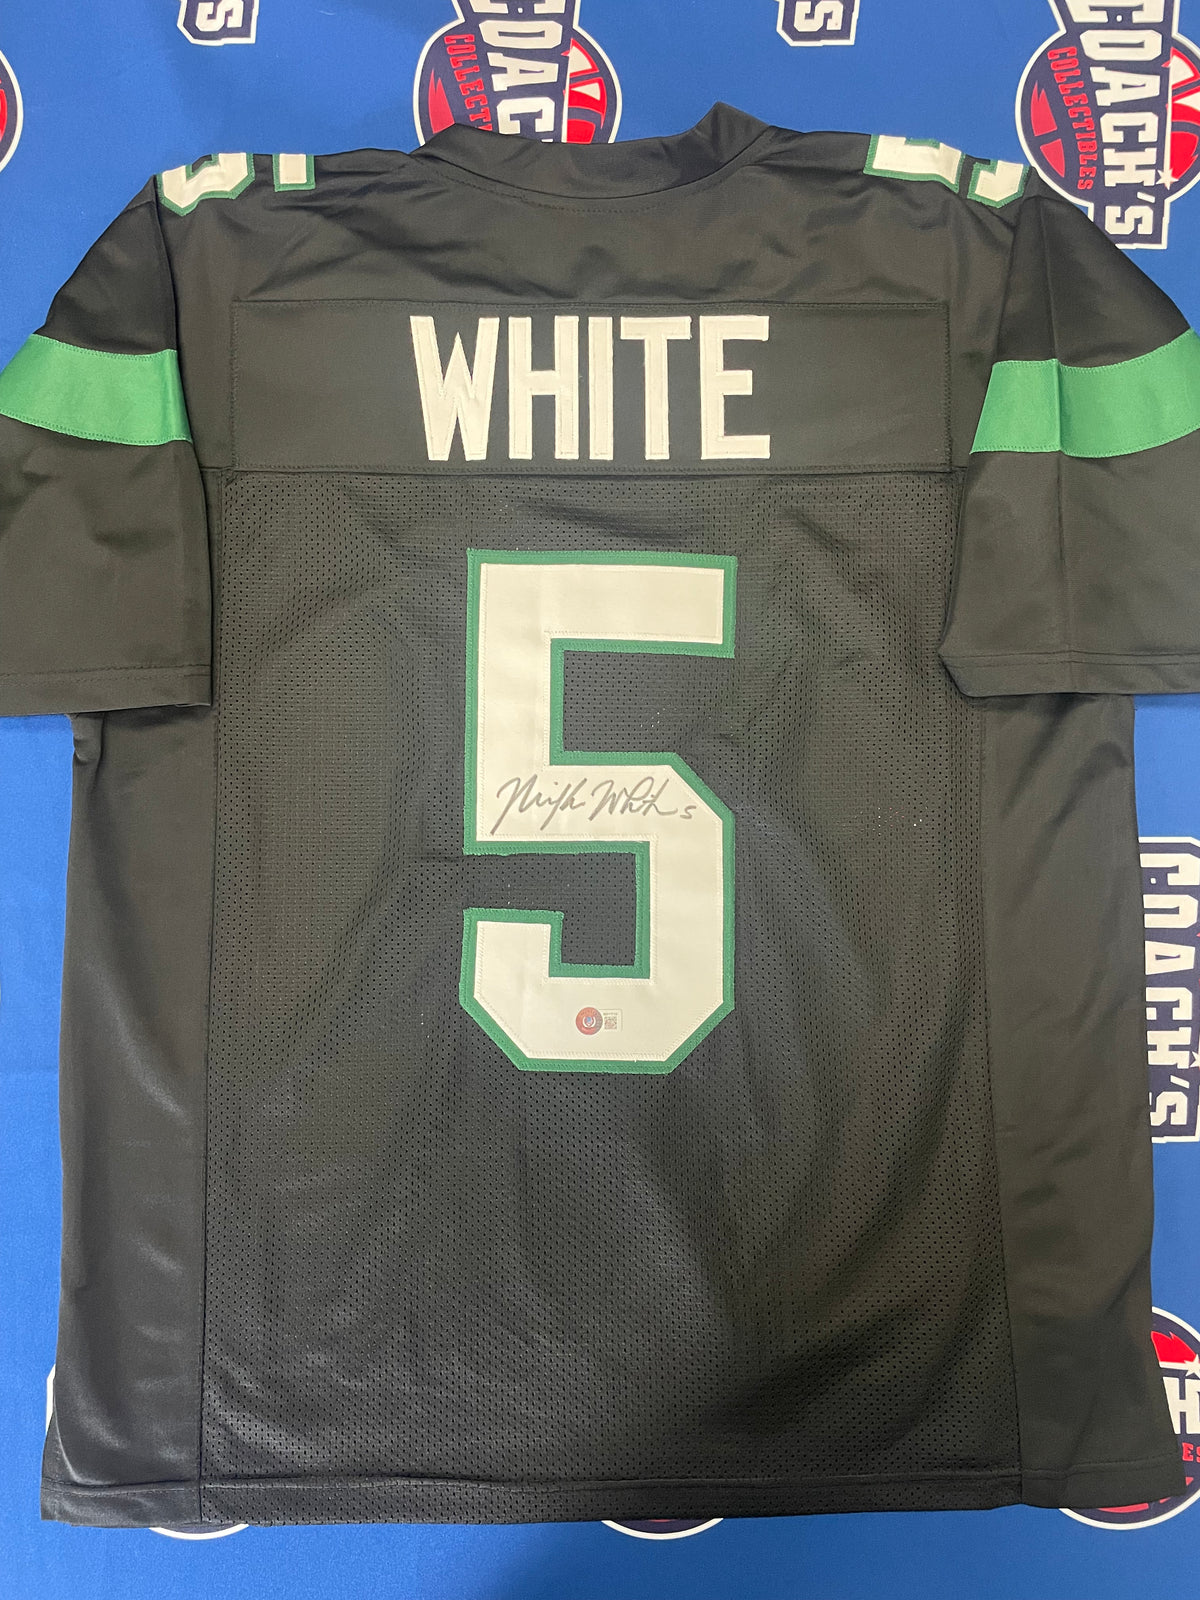 Team Autographed Authentic White Jersey: 2023 (See Description for Details)